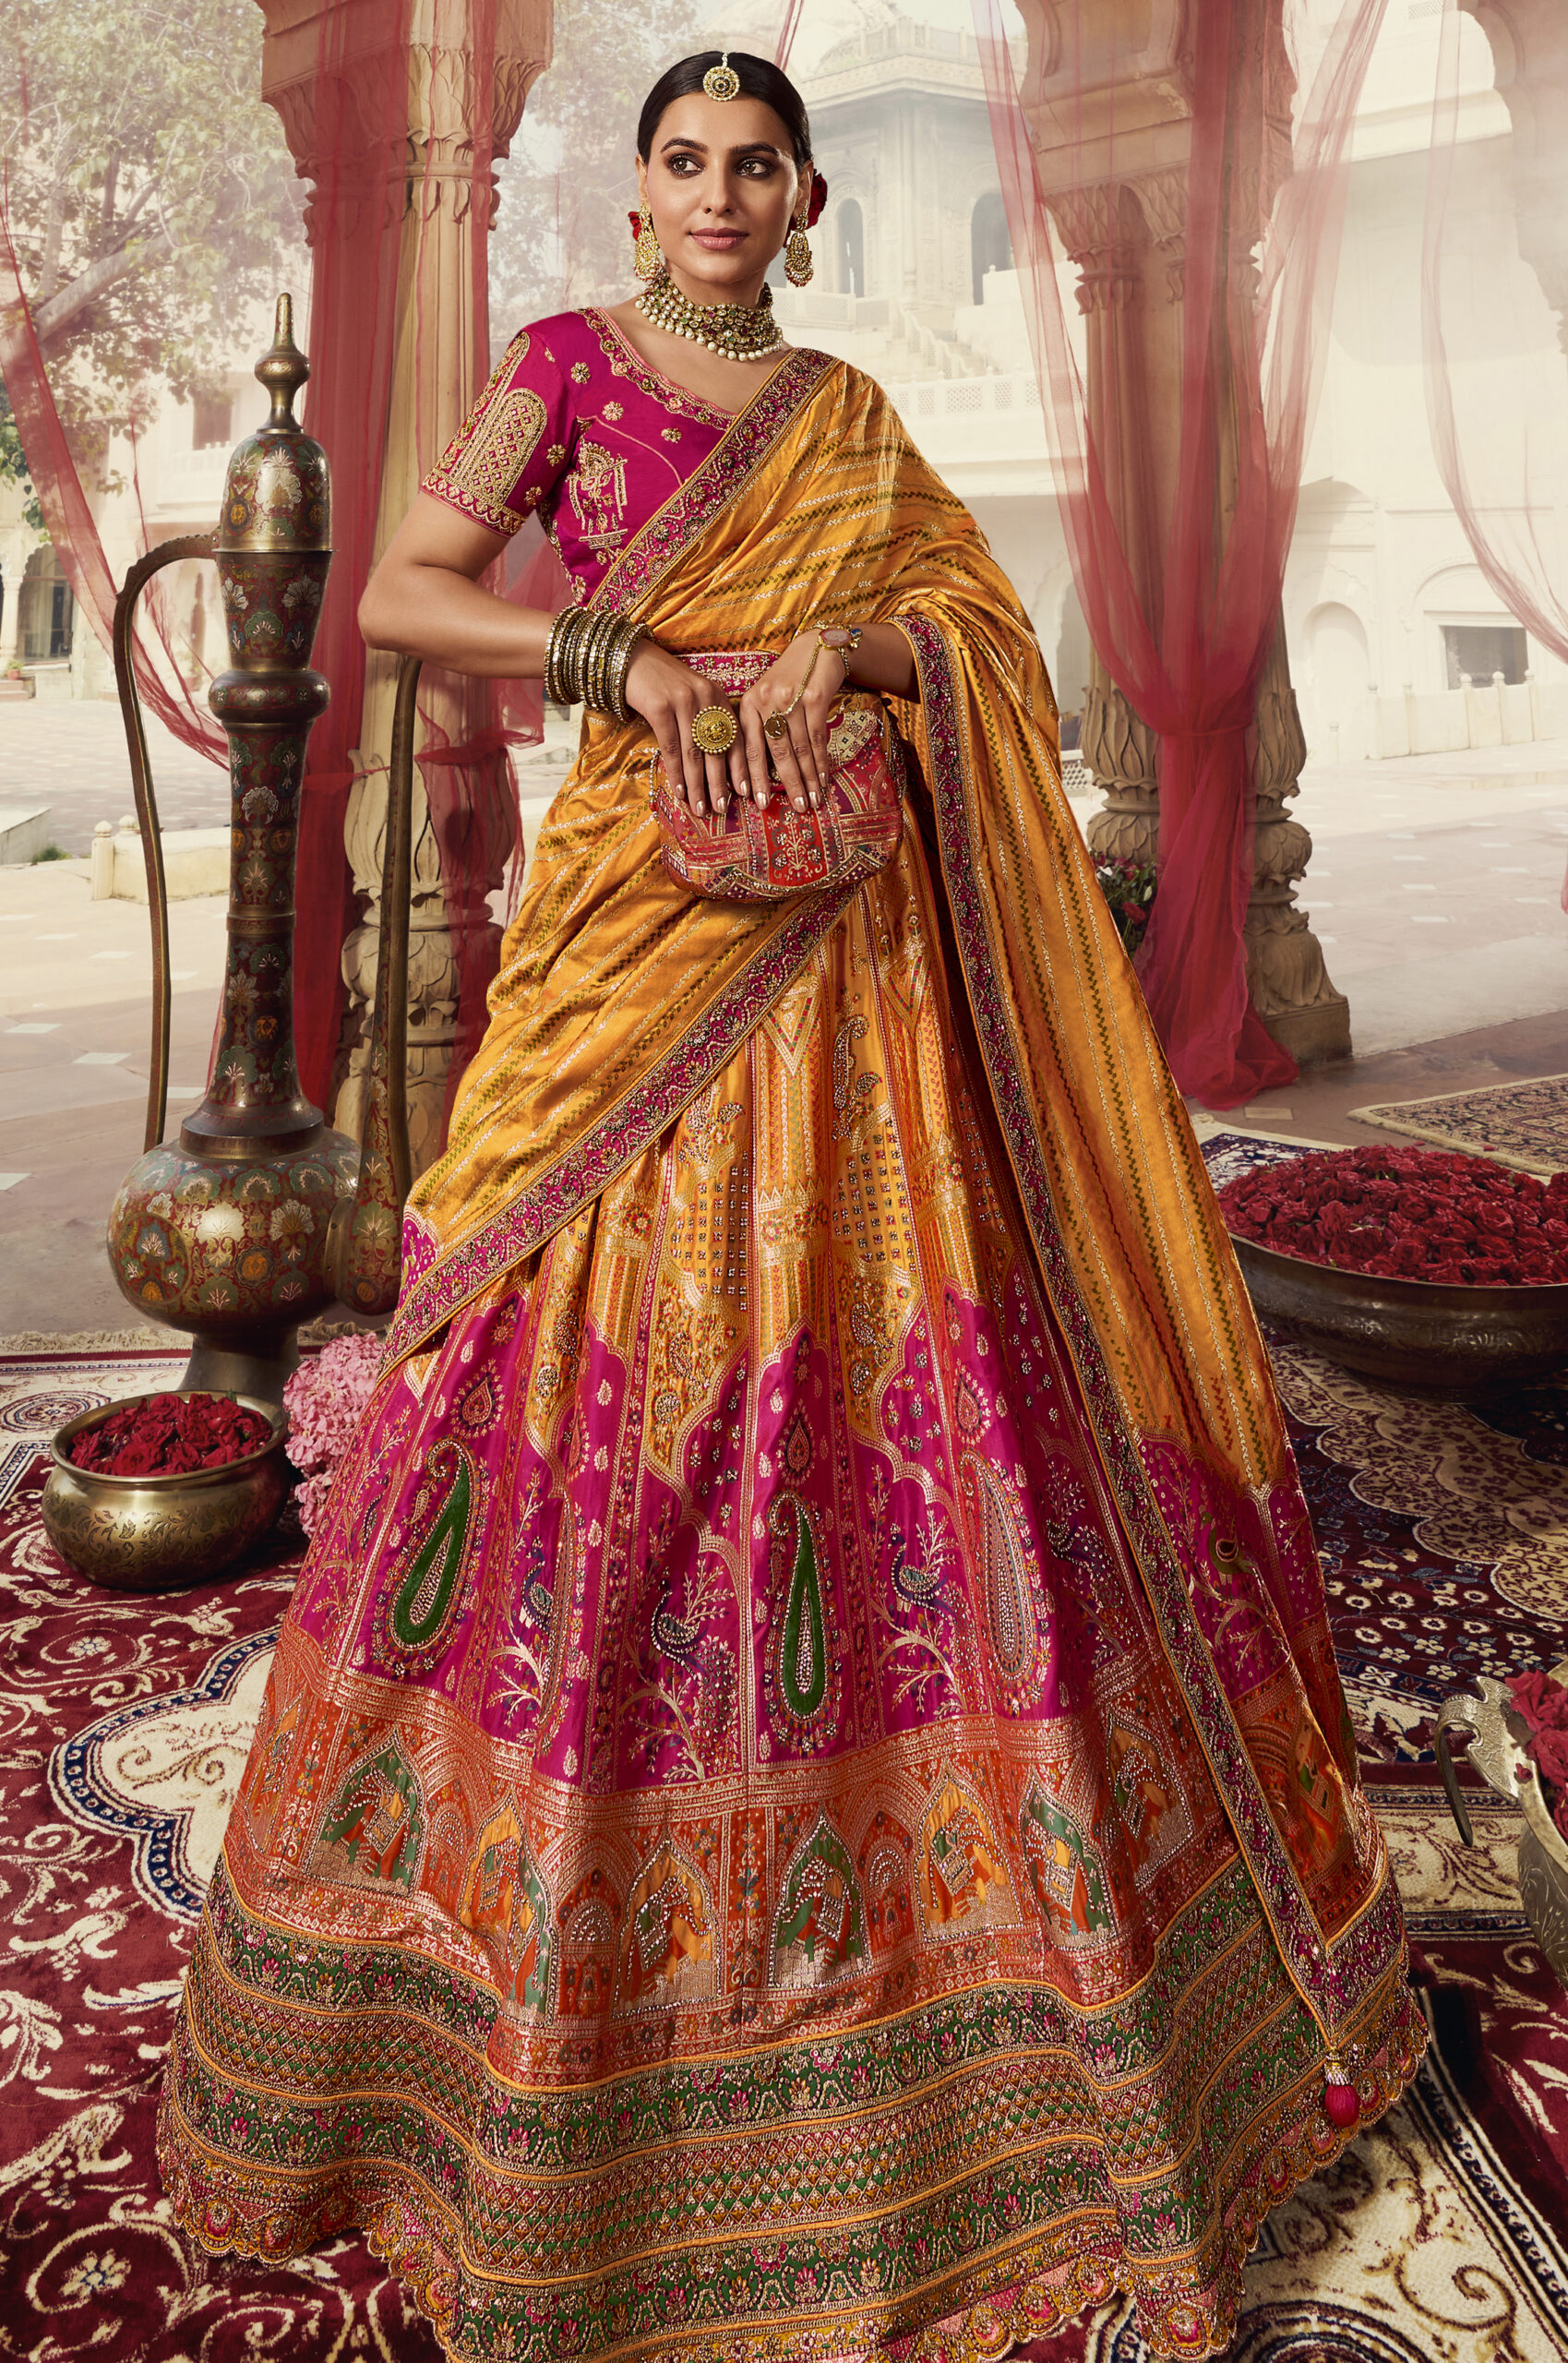 Gorgeous: Kiara Advani looks ethereal in gold sequinned orange lehenga